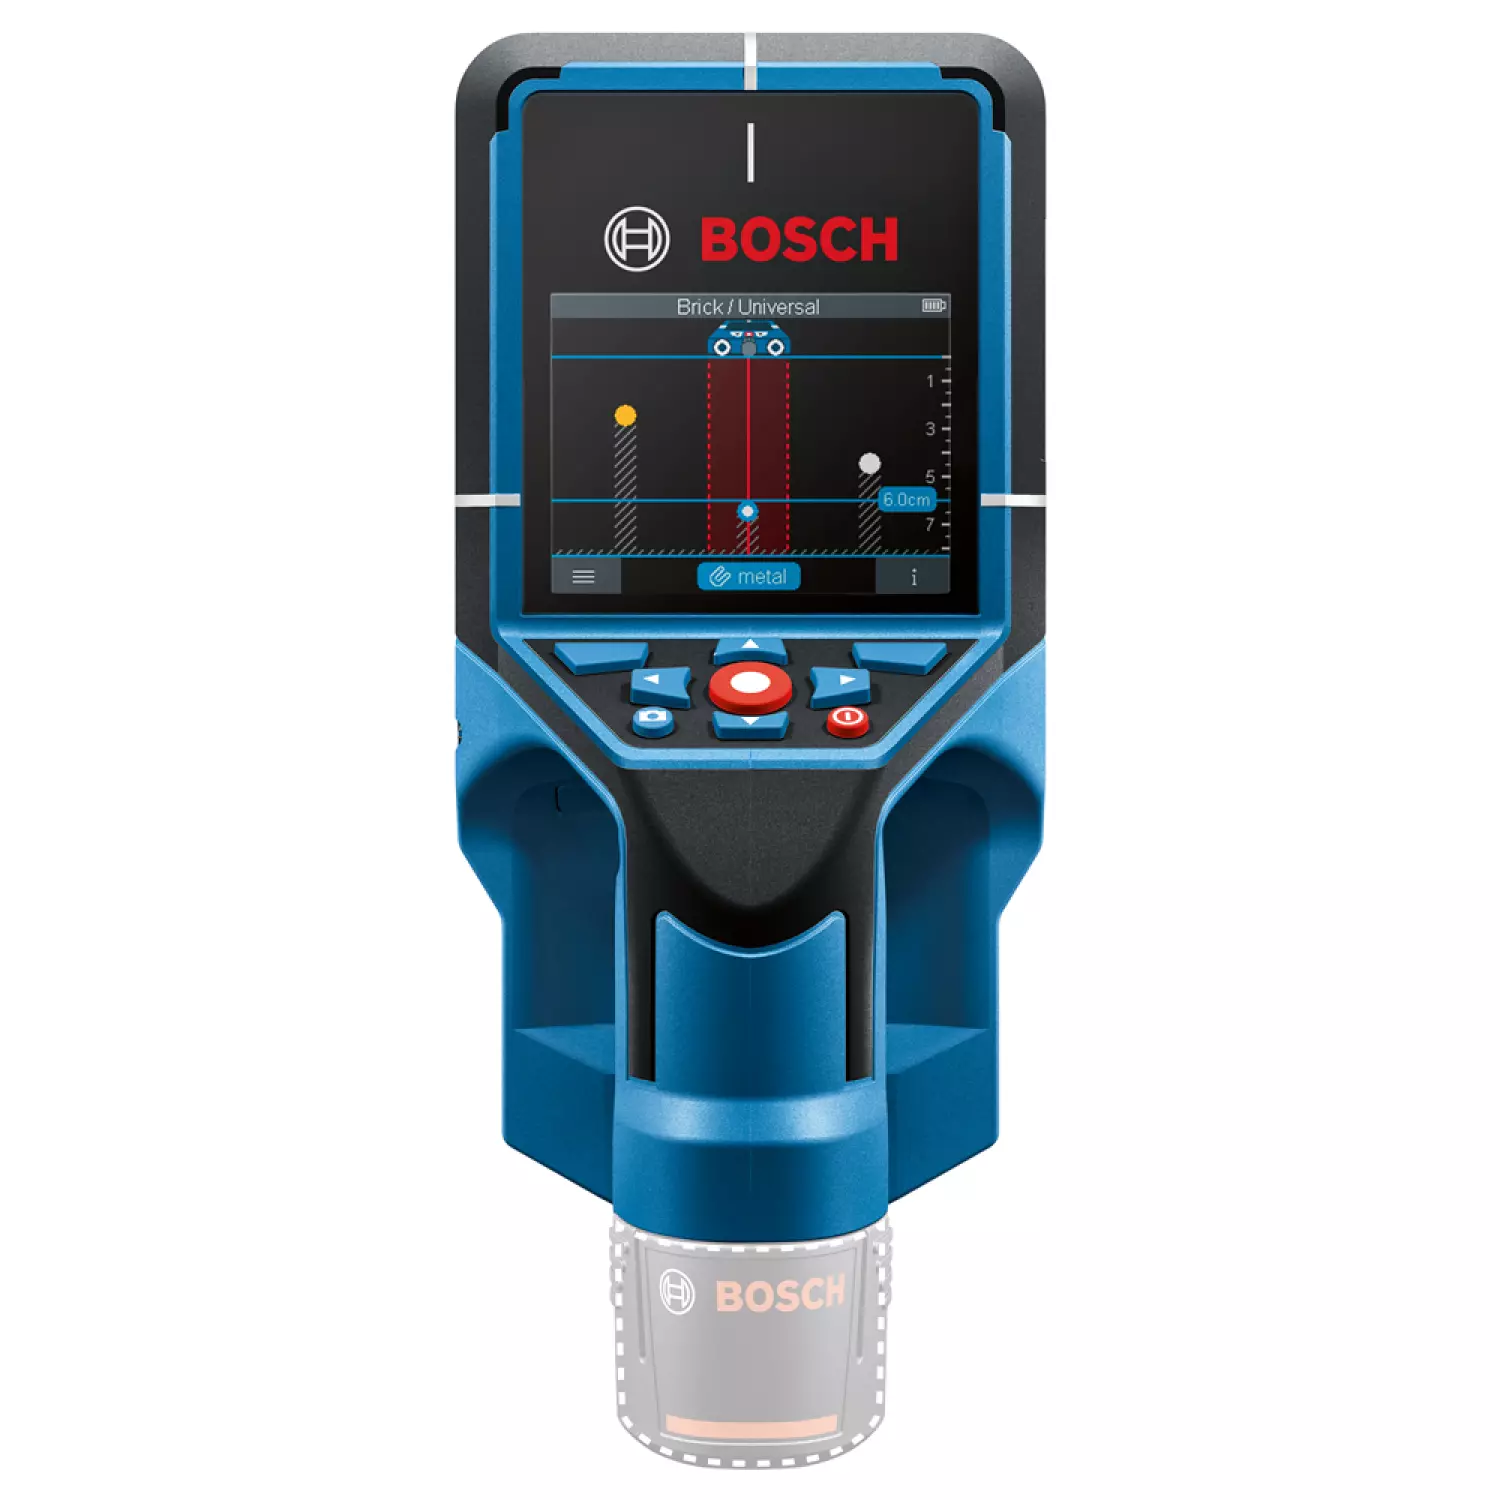 Bosch D-tect 200 C Detector muurscanner body in L-Boxx - 200mm-image